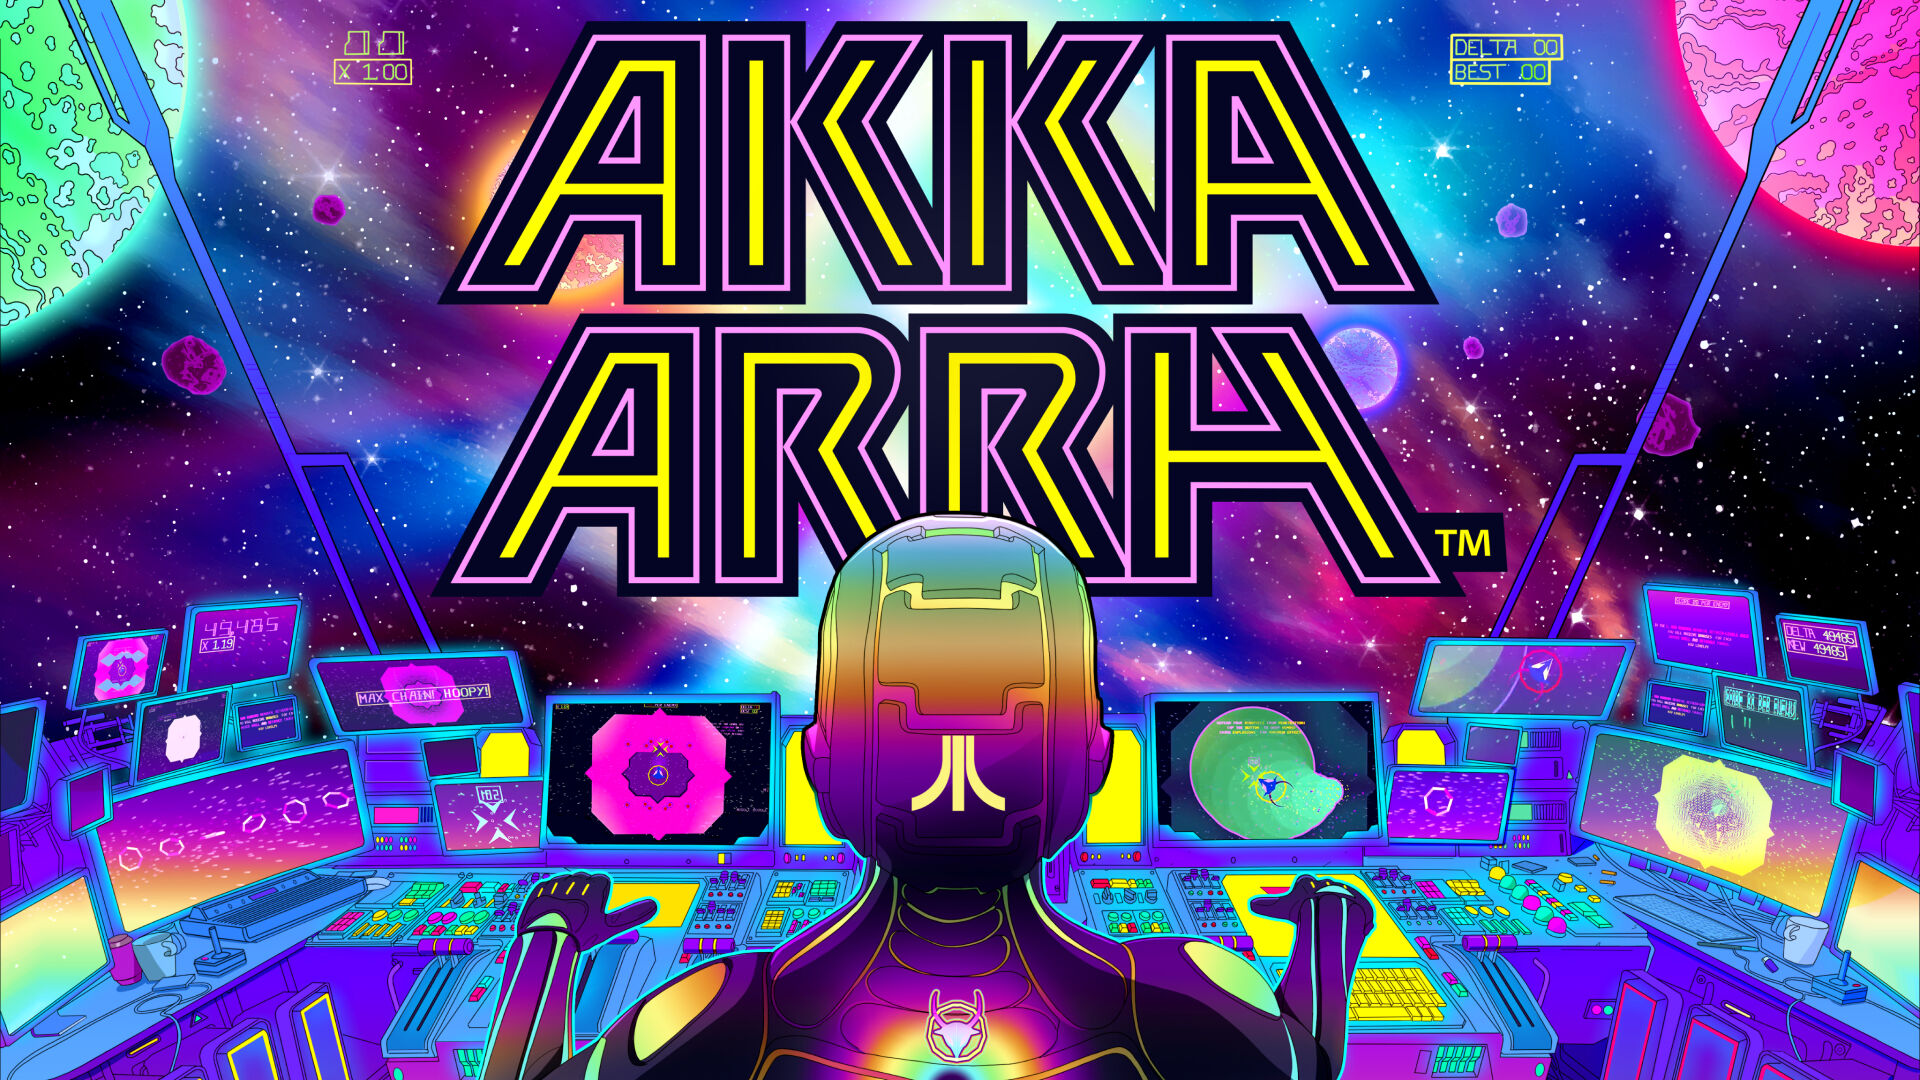 Akka Arrh ダウンロード版 | My Nintendo Store（マイニンテンドーストア）